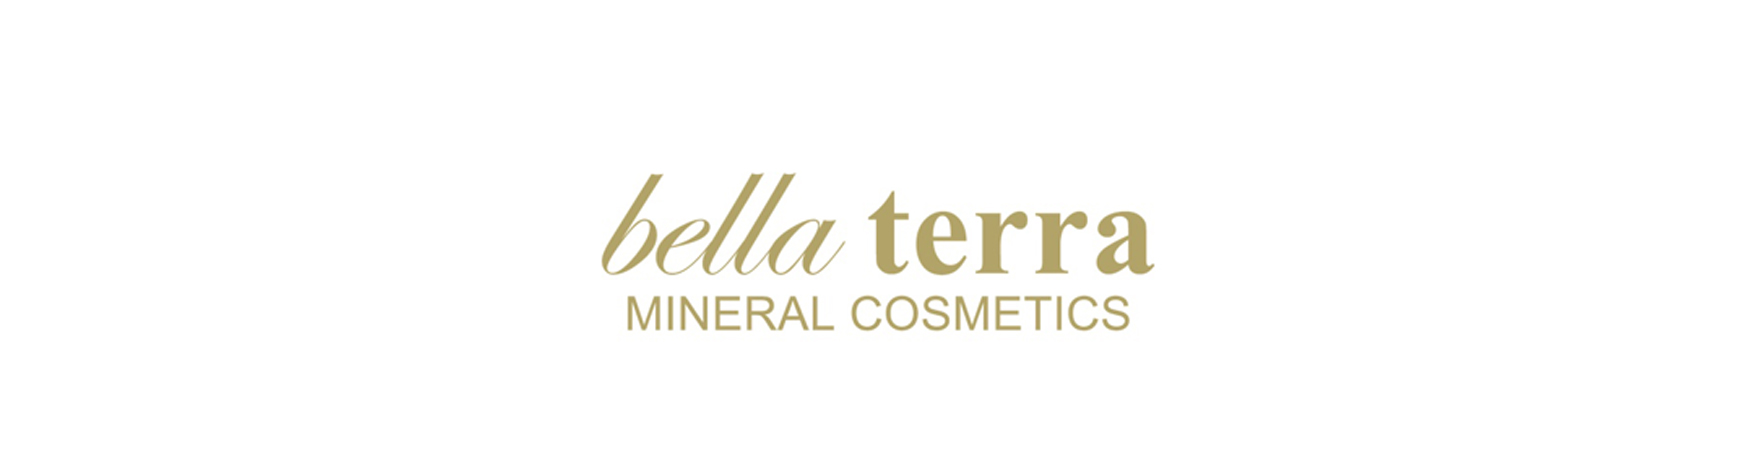 Bellaterra Cosmetics